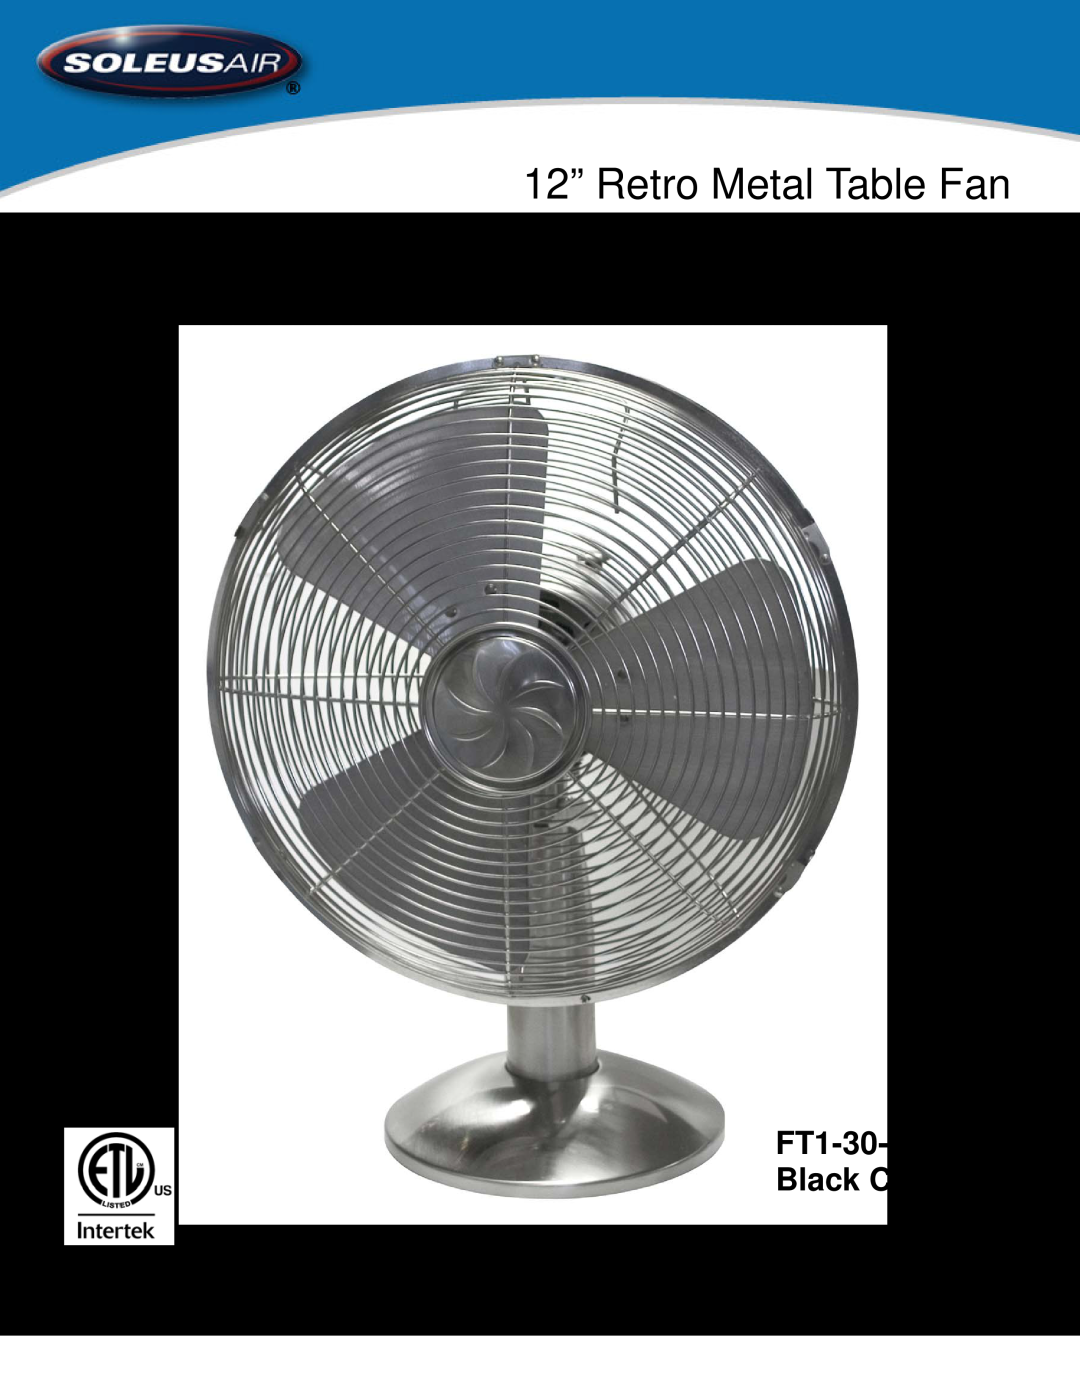 Soleus Air manual 12” Retro Metal Table Fan, Model No FT1-30-42, Operating Instructions, FT1-30-41, Black Chrome 